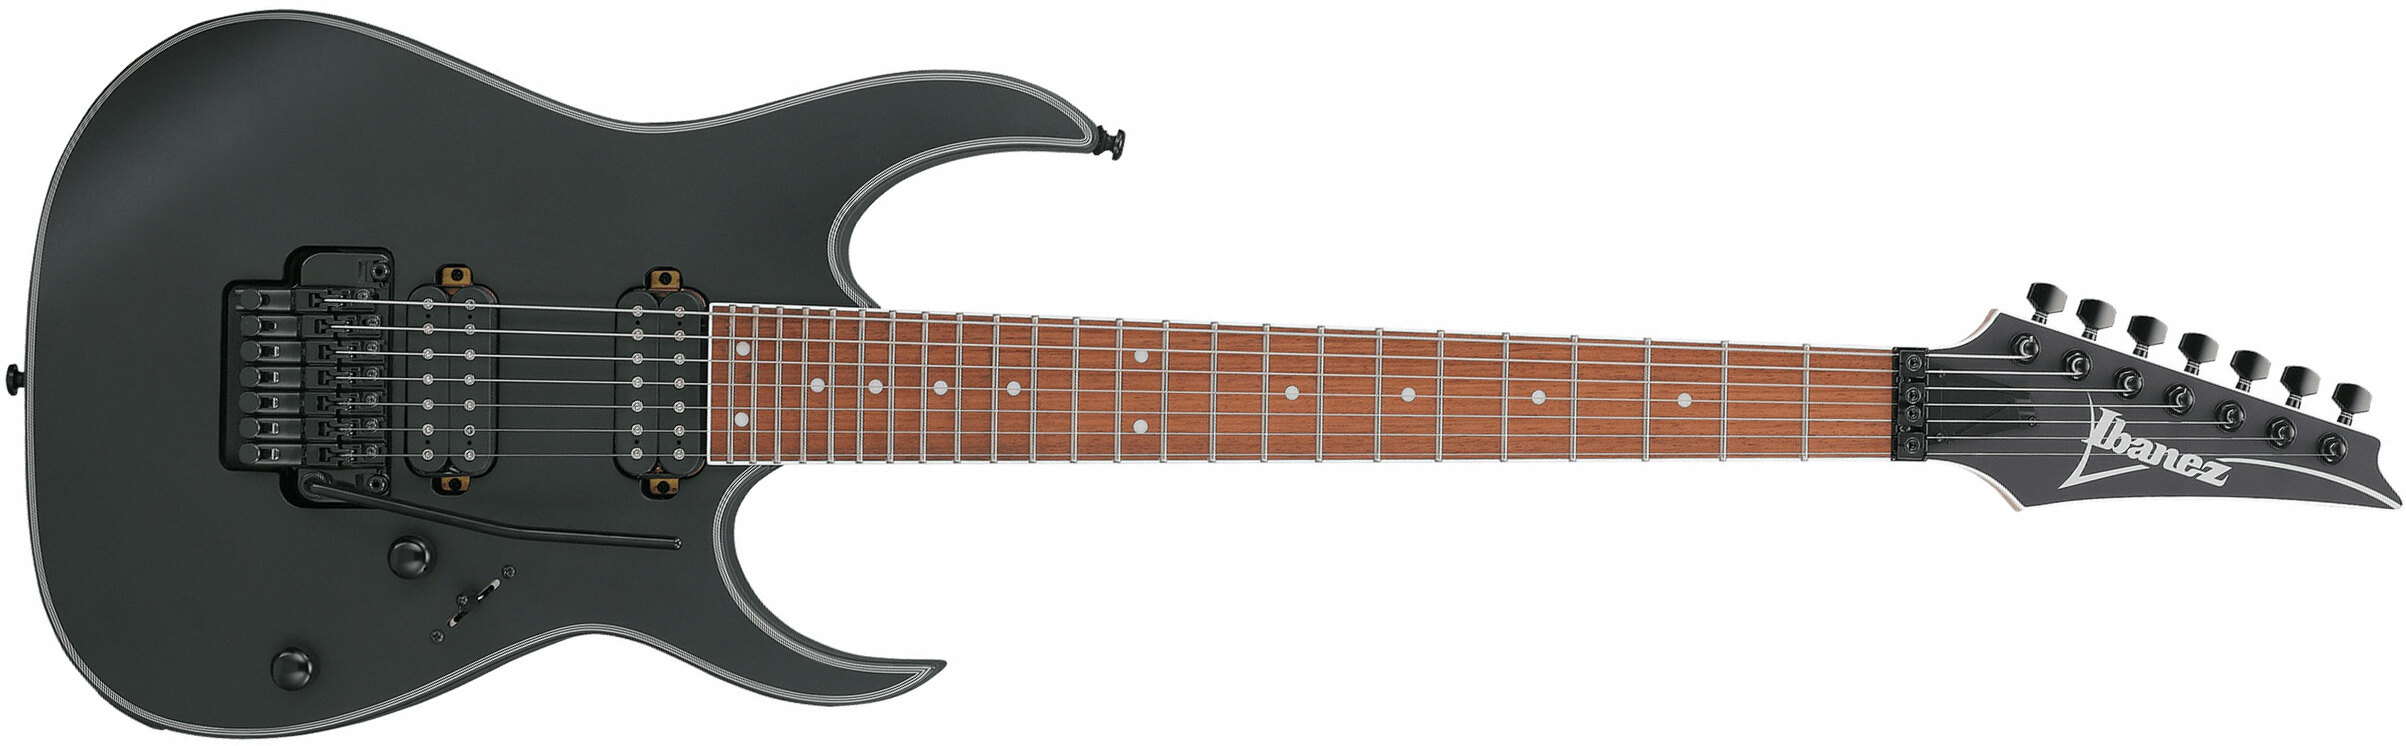 Ibanez Rg7420ex Bkf Standard 7c 2h Ht Jat - Black Flat - Guitarra eléctrica de 7 cuerdas - Main picture